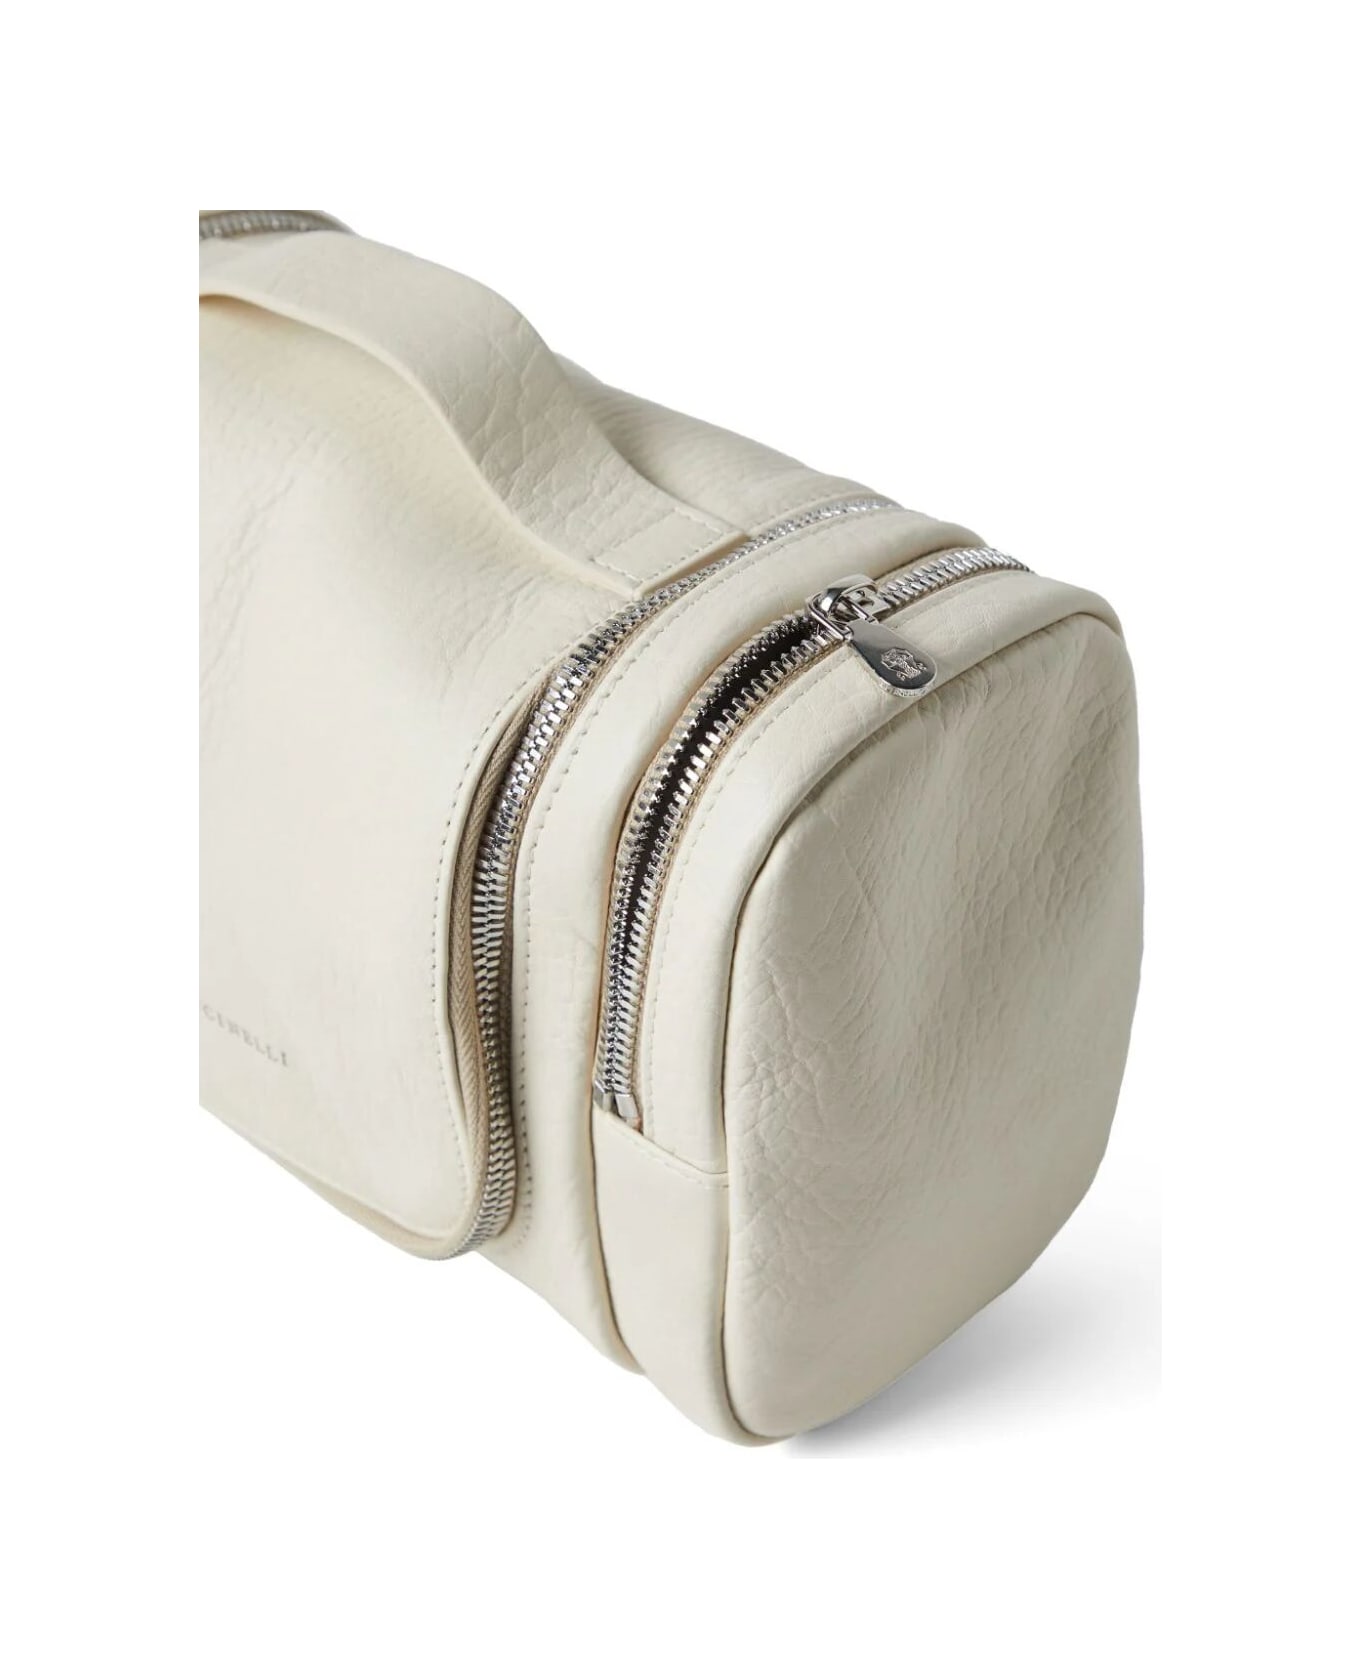 Brunello Cucinelli Leather Beauty Case - English White